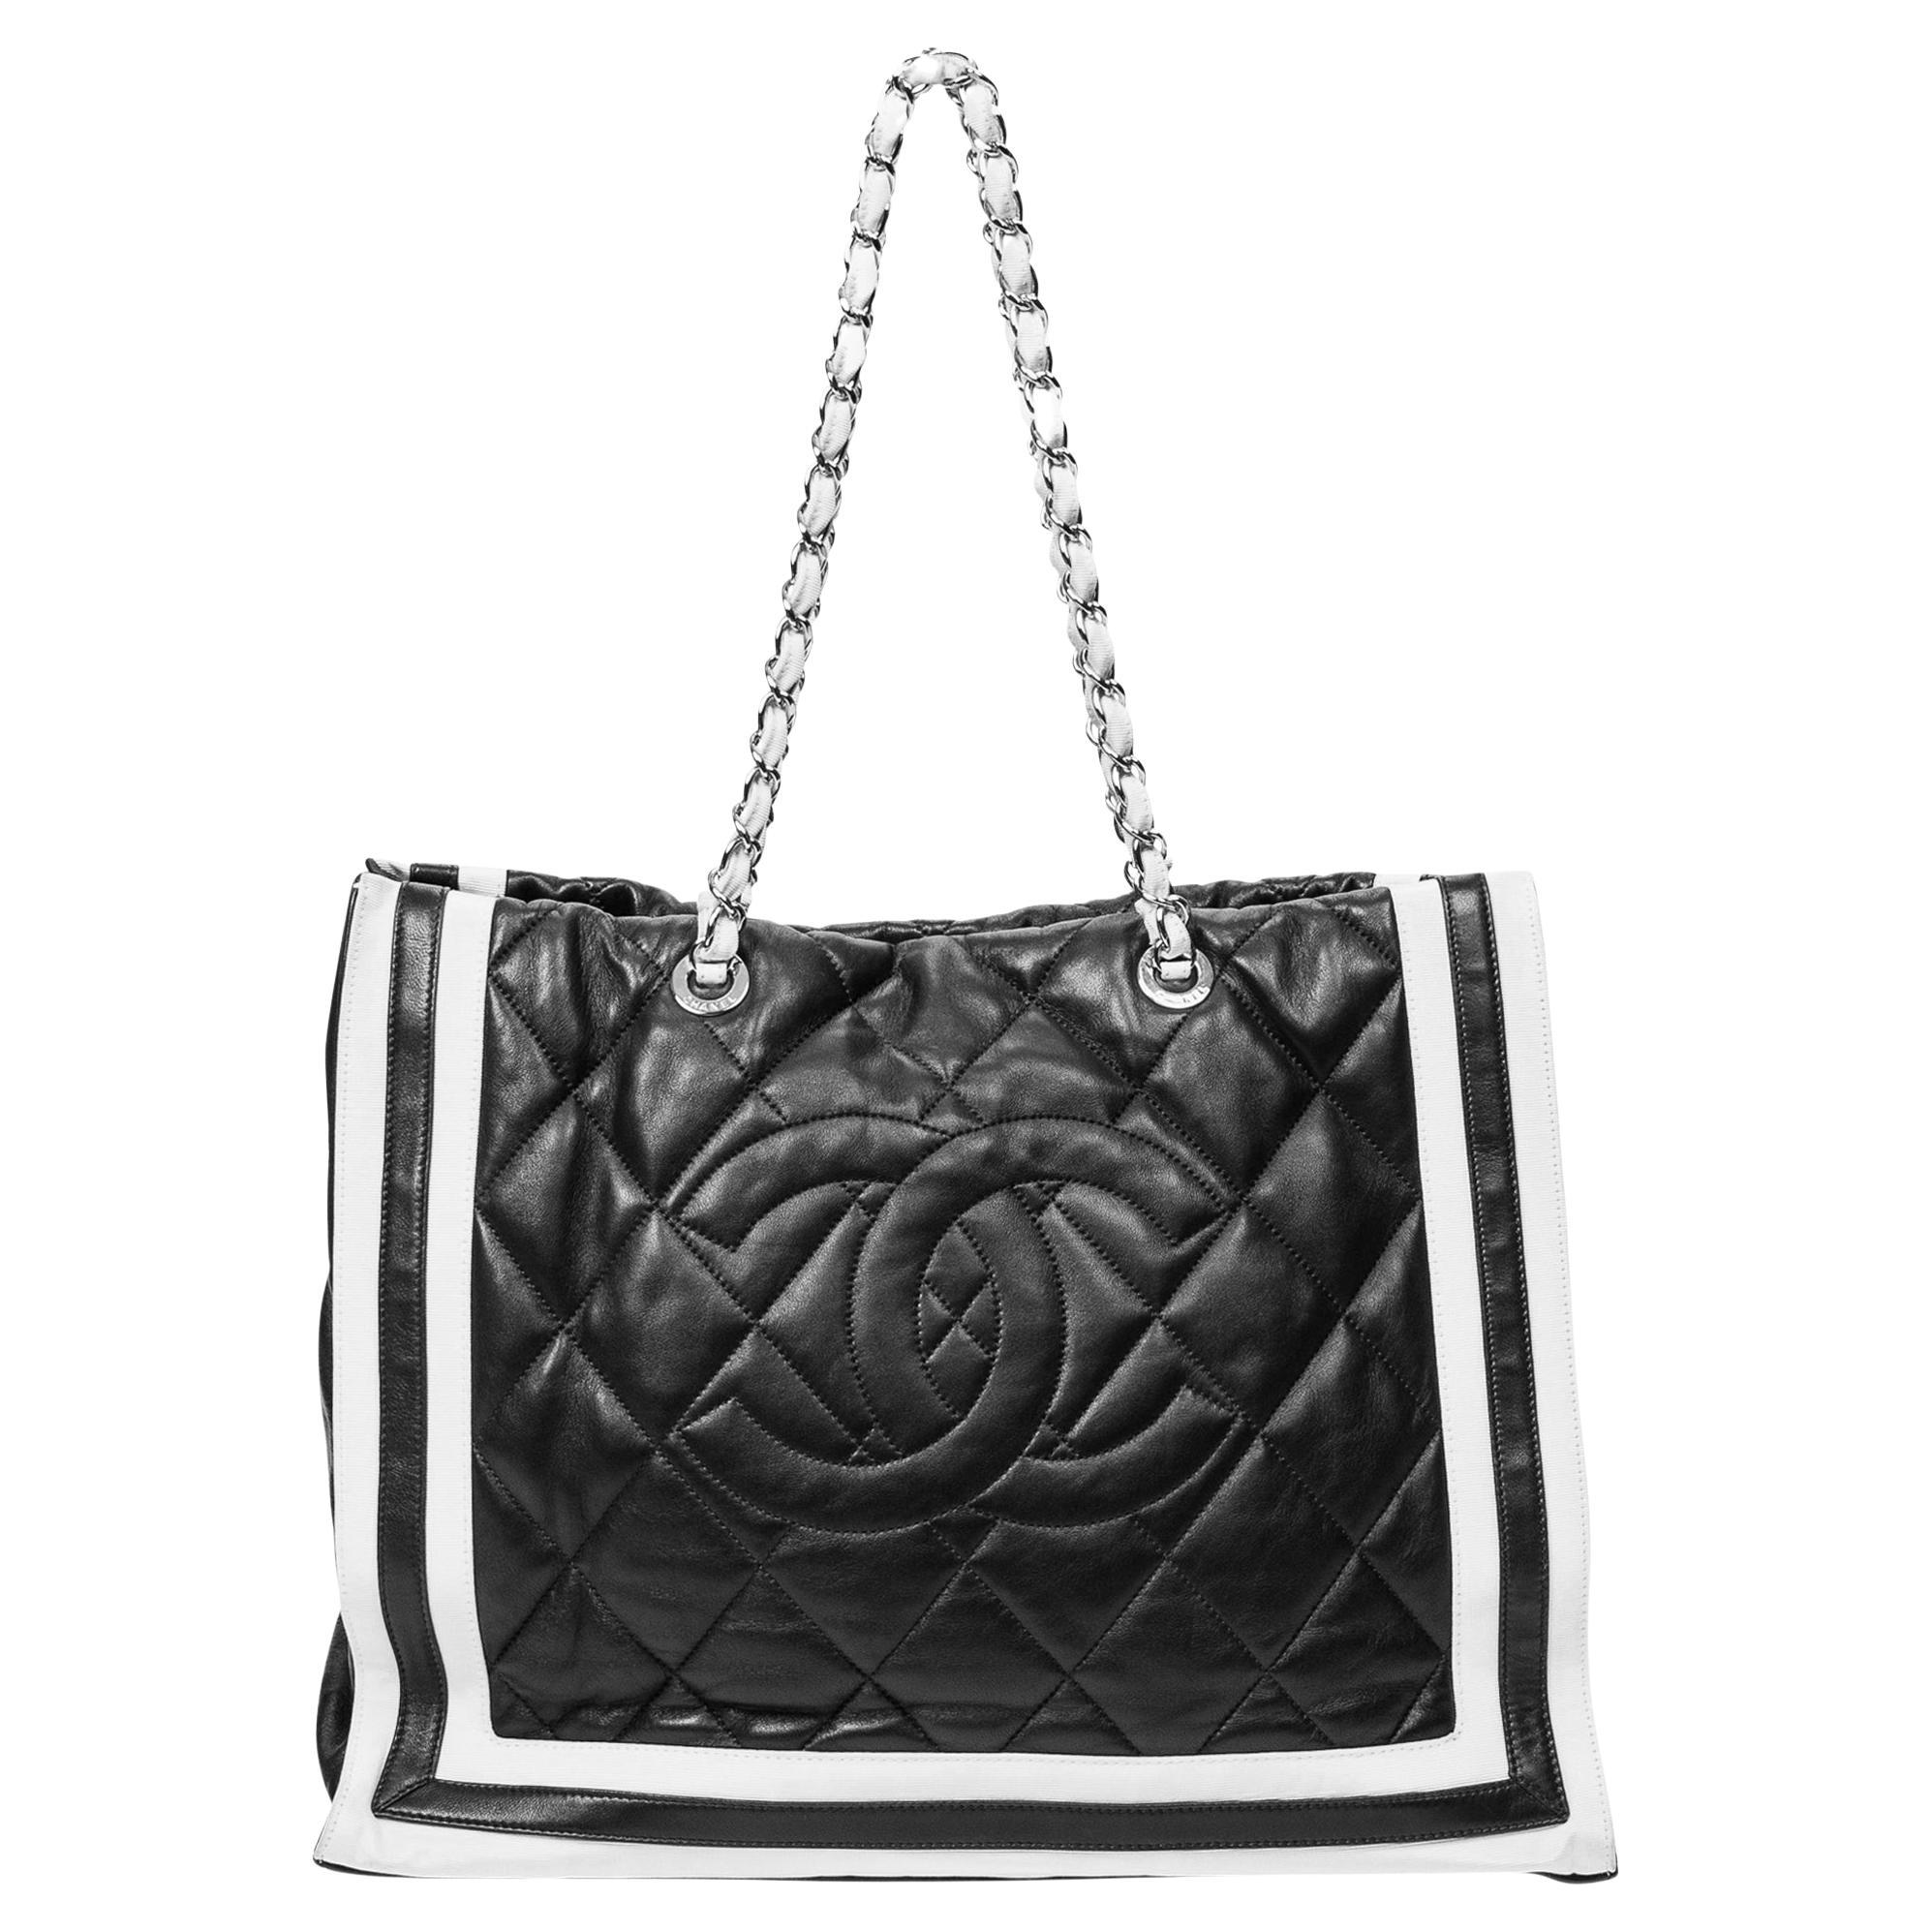 Chanel 2009 - Grand sac cabas à chaîne CC bleu marine en vente